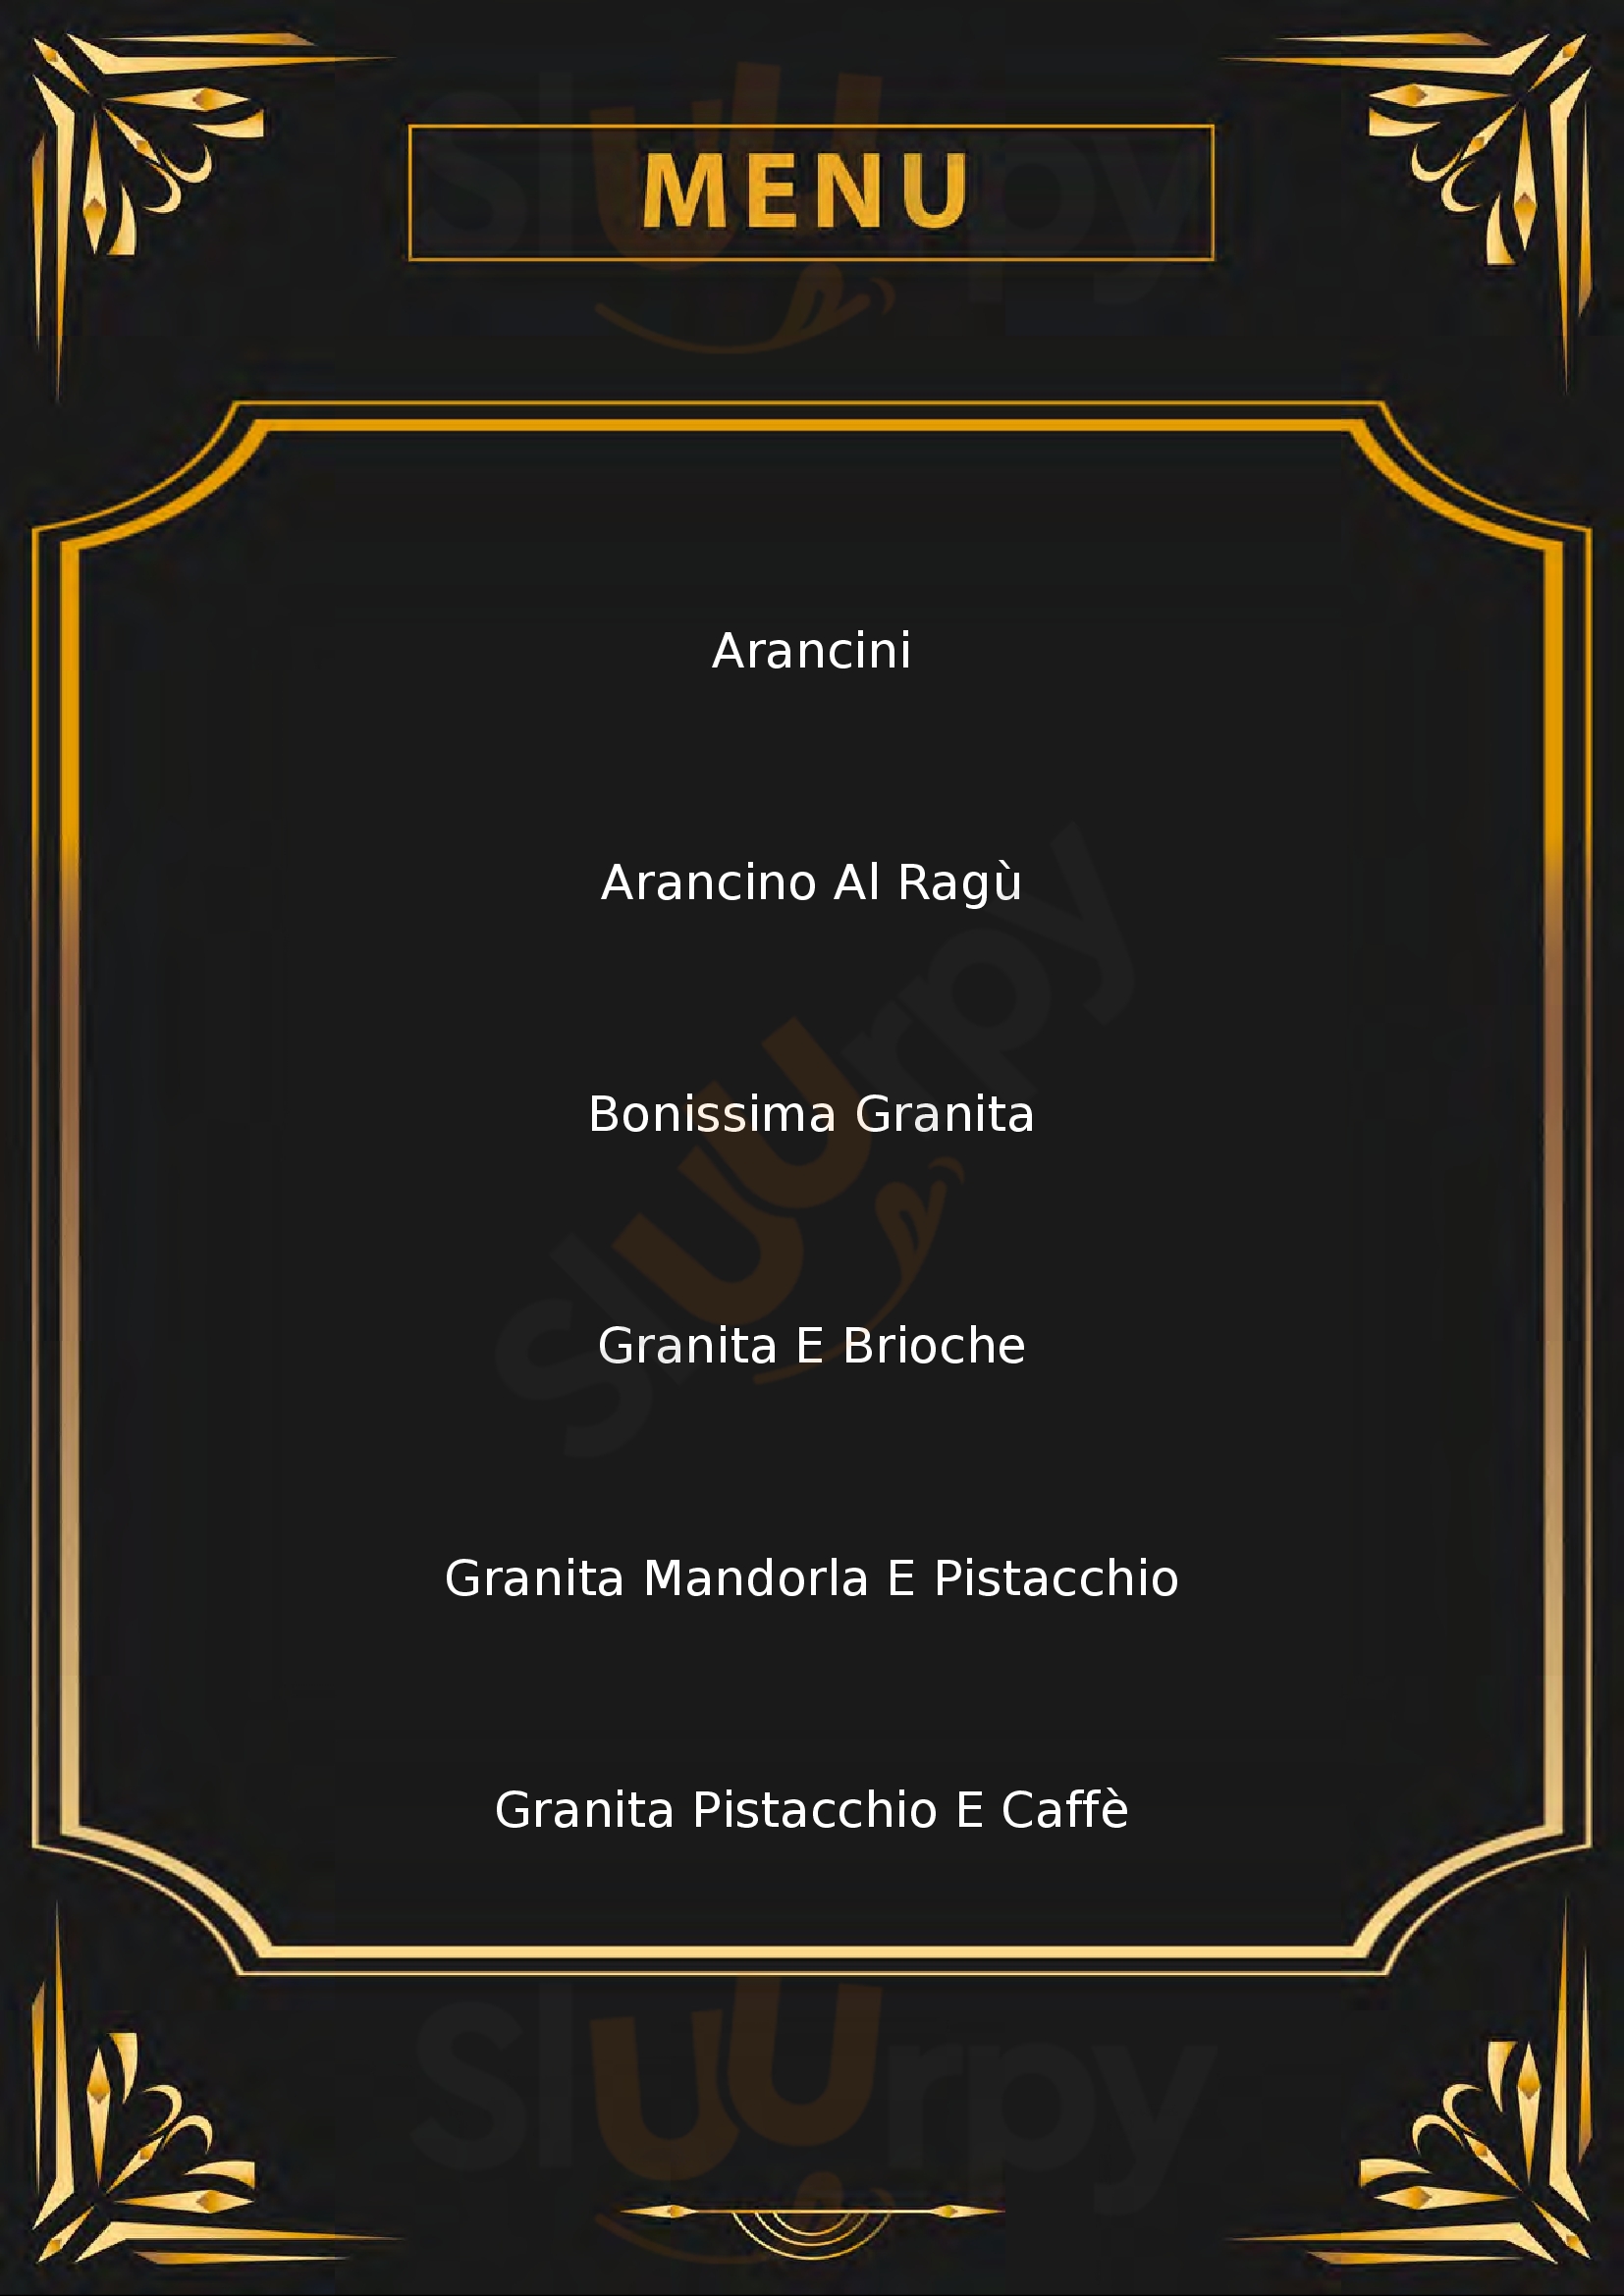 Bar Pasticceria Cafe Elite Nicolosi menù 1 pagina